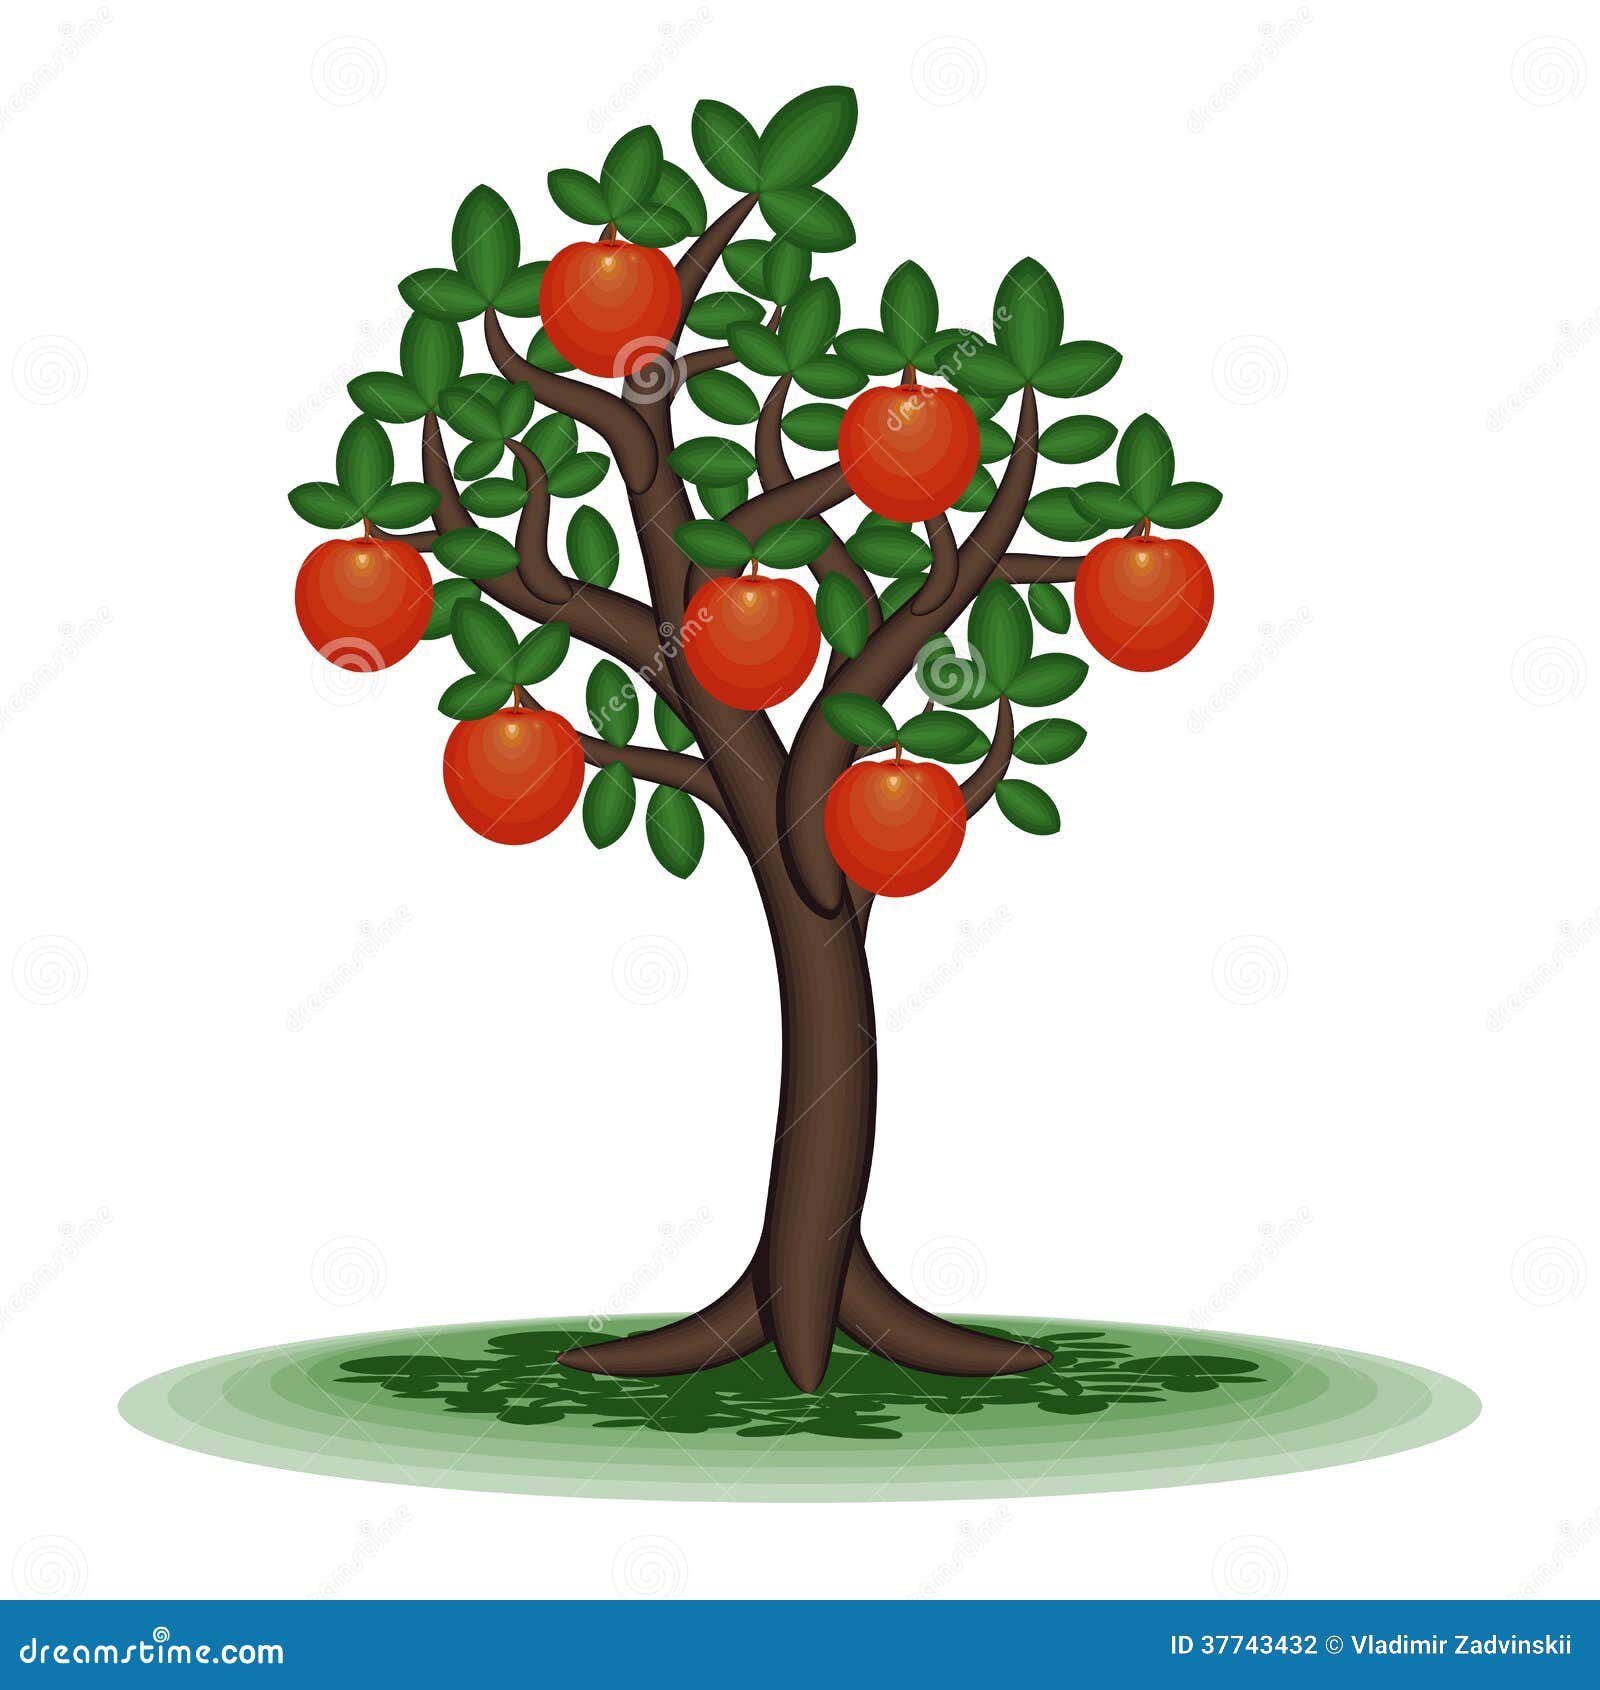 clipart fruit tree - photo #31